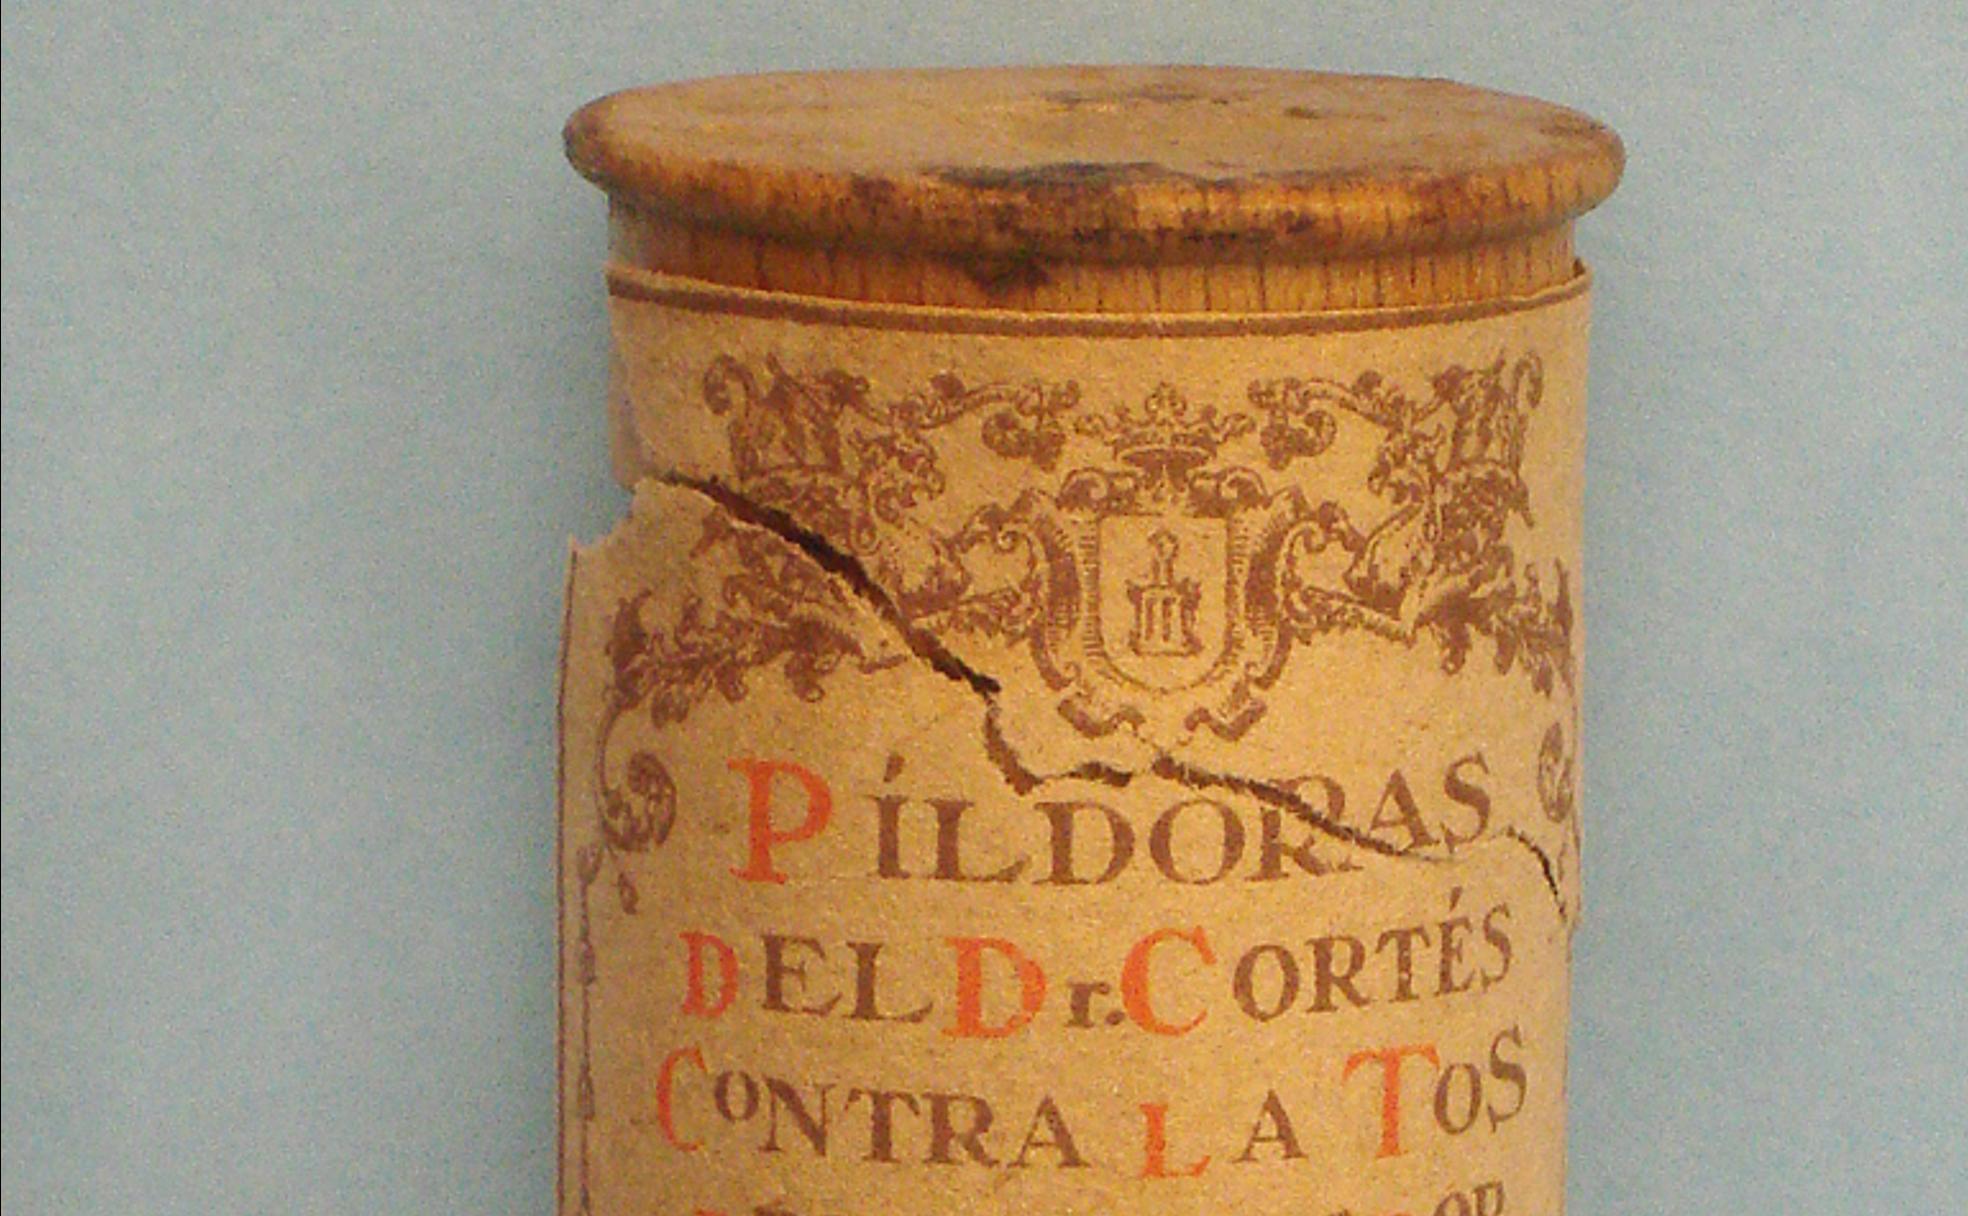 Un frasco de Píldoras del Dr. Cortés.